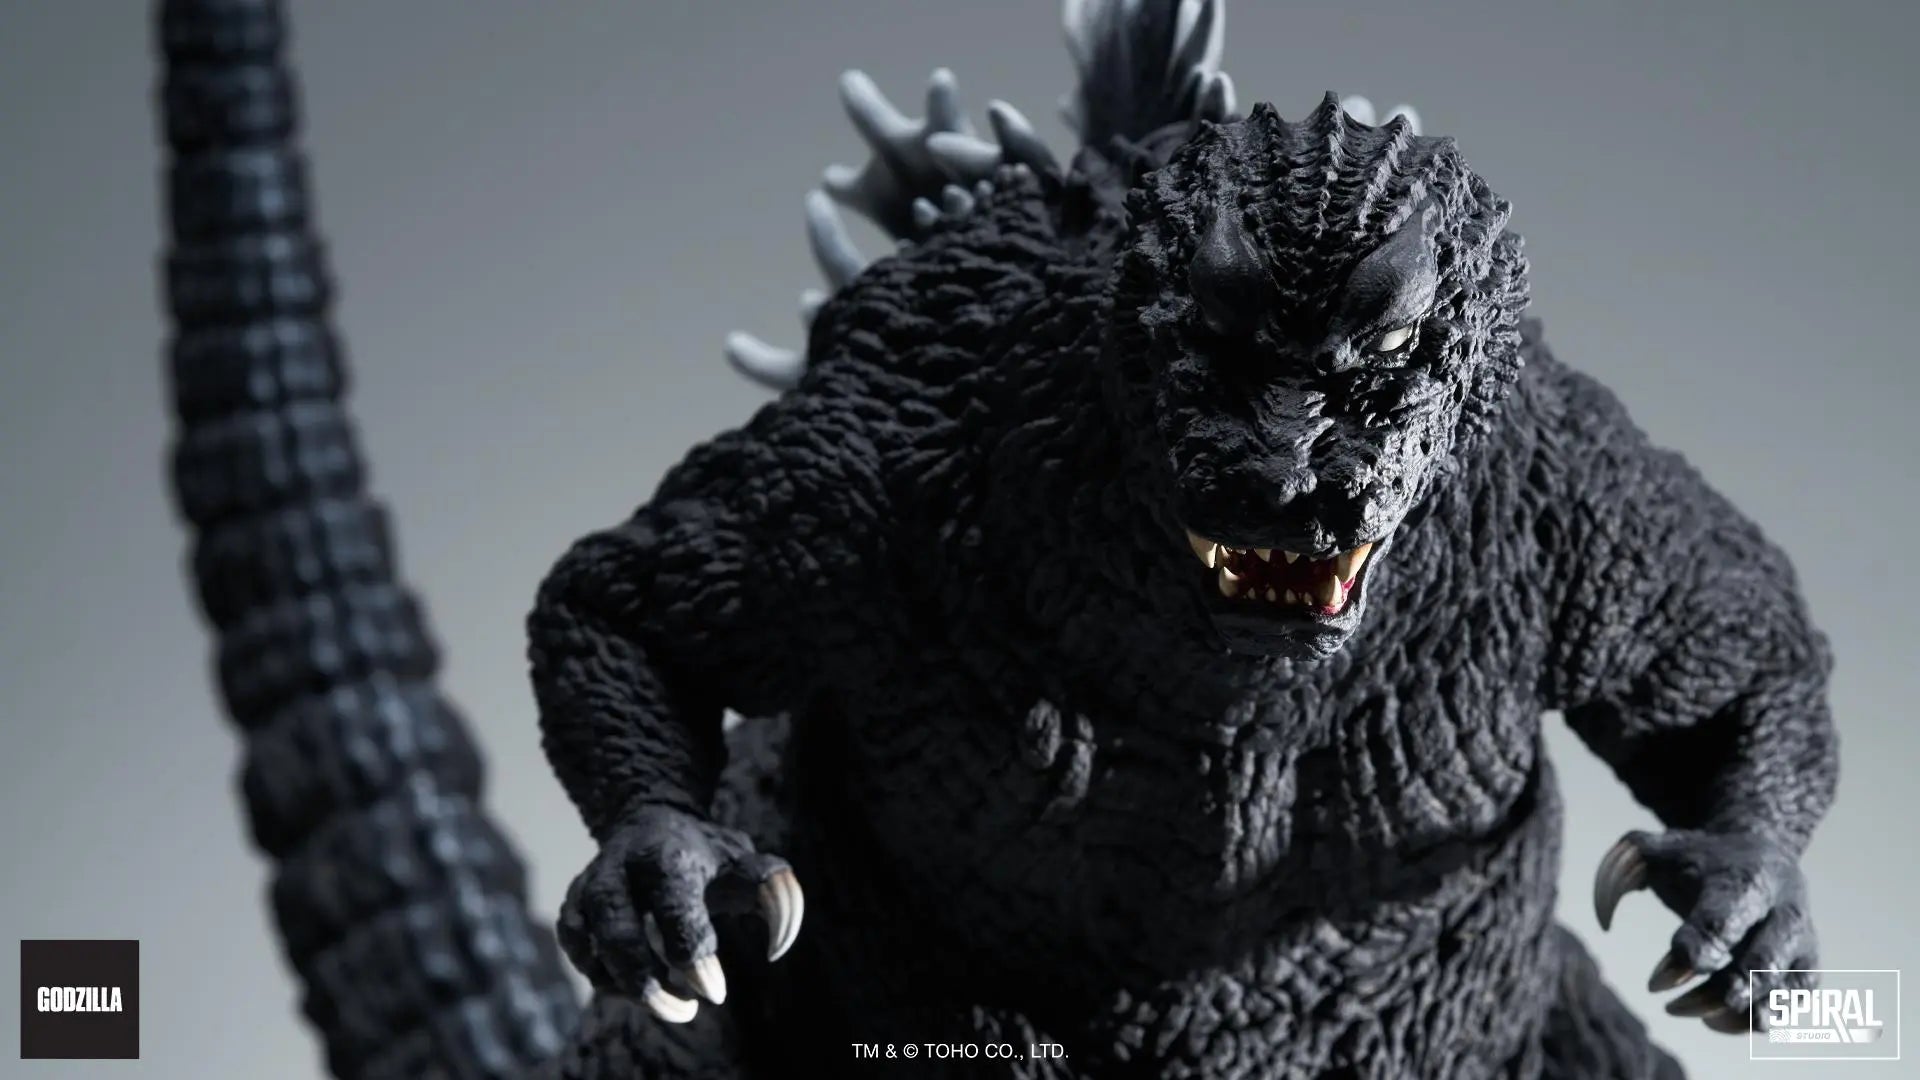 The Legacy Series Godzilla 2001 Statue (Spiral Studios)